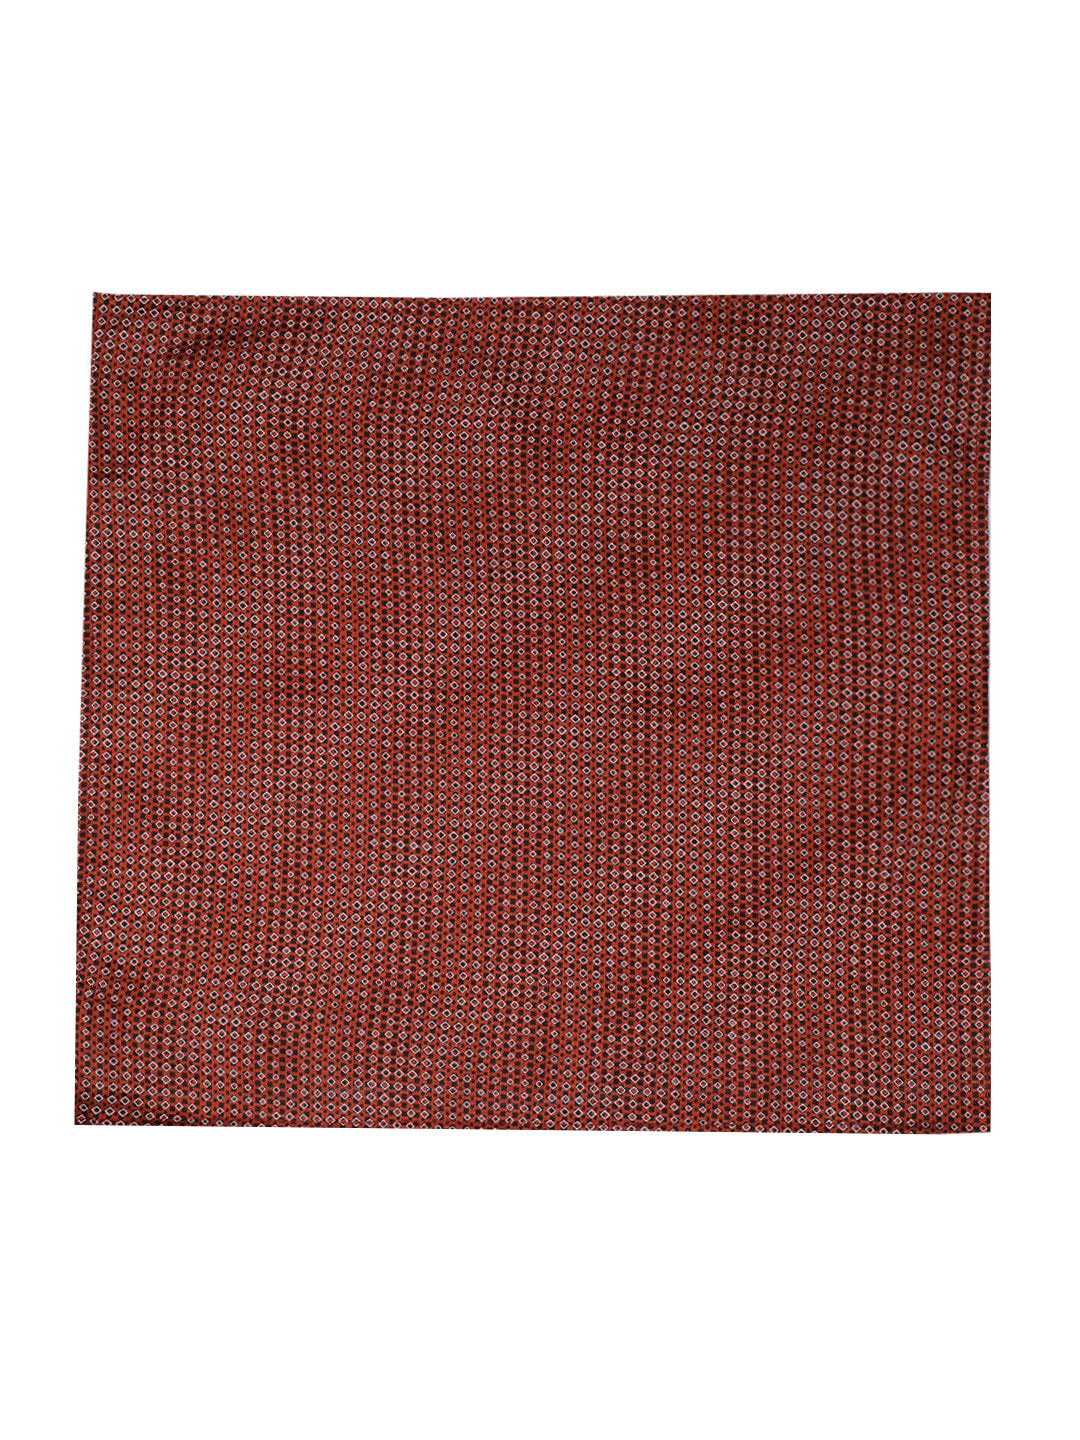 Red pocket square, silk pocket squares, tuxedo pocket square